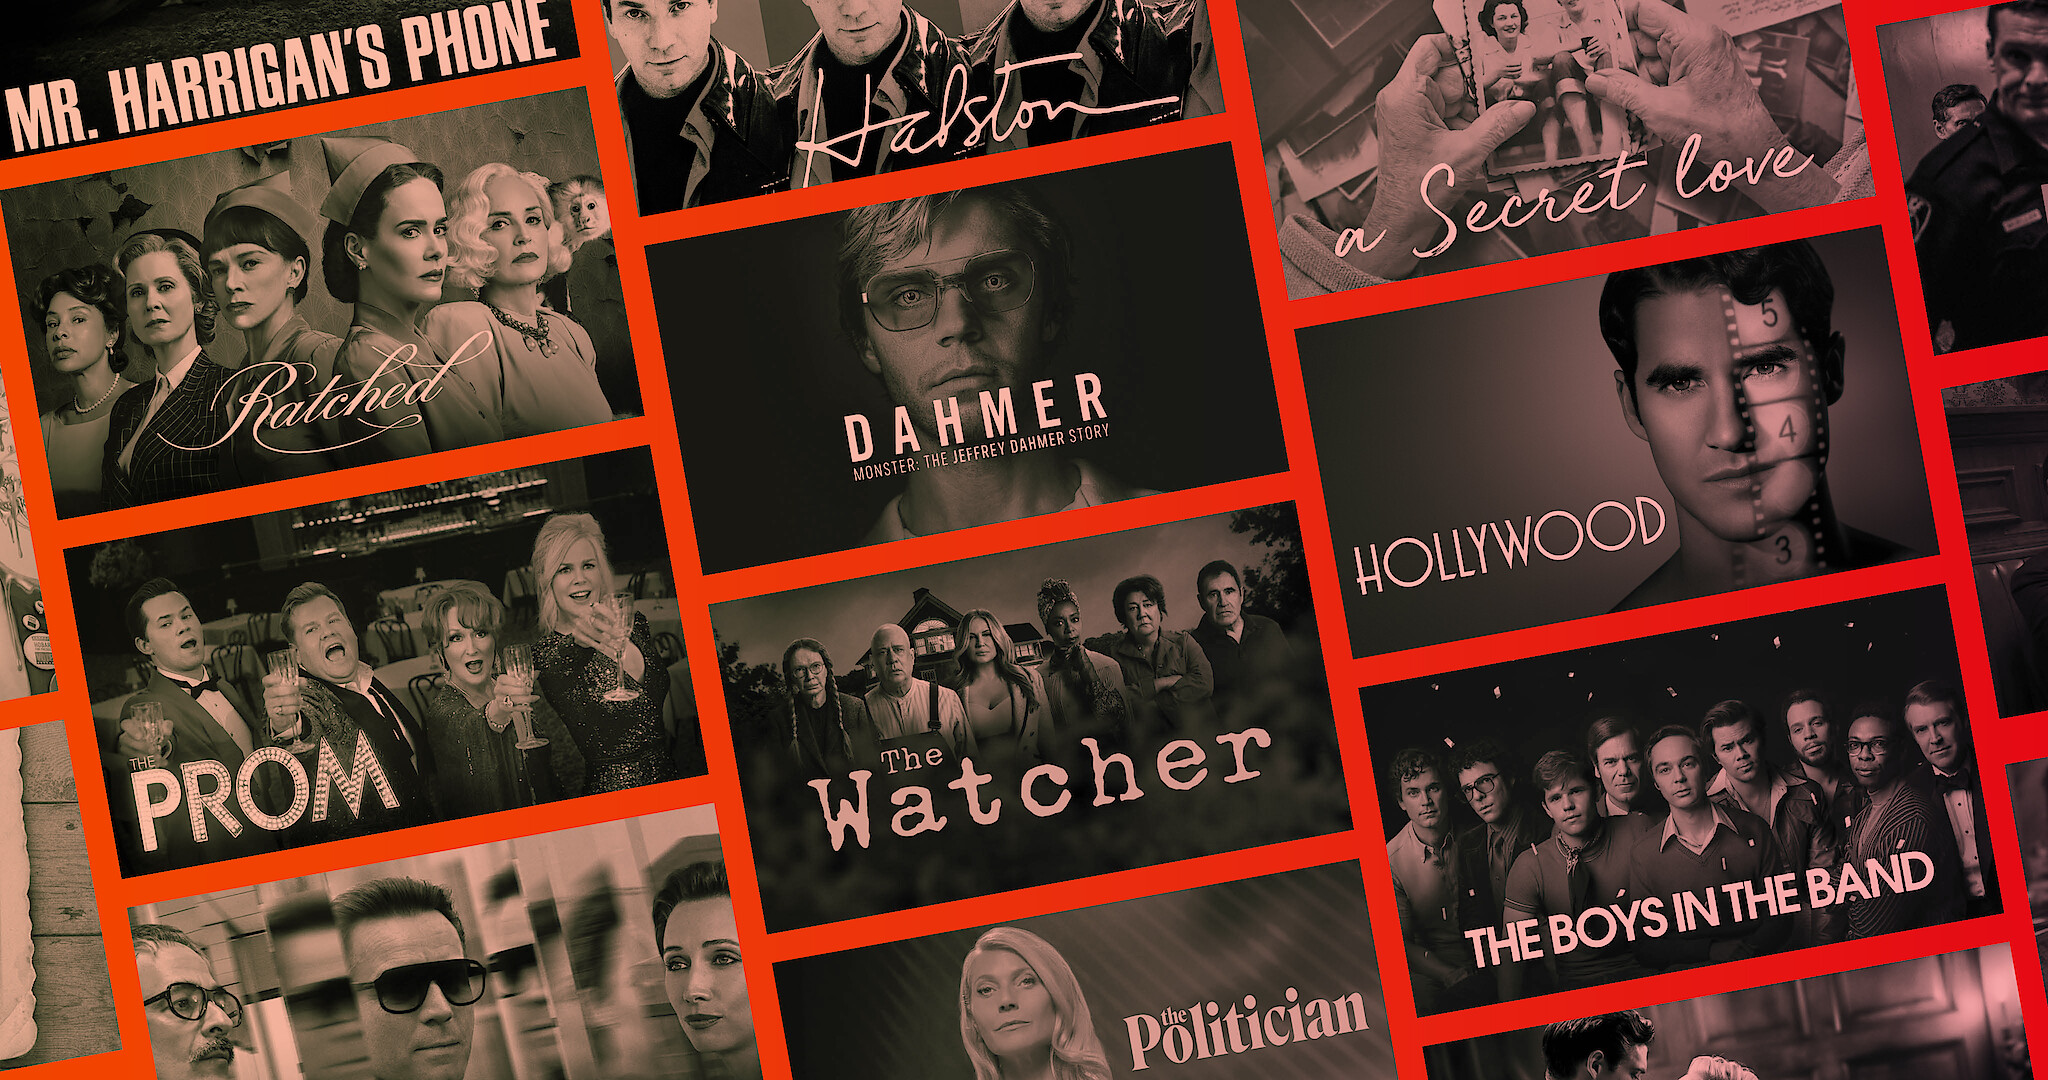 Netflix viewers heartbroken at new true drama series with